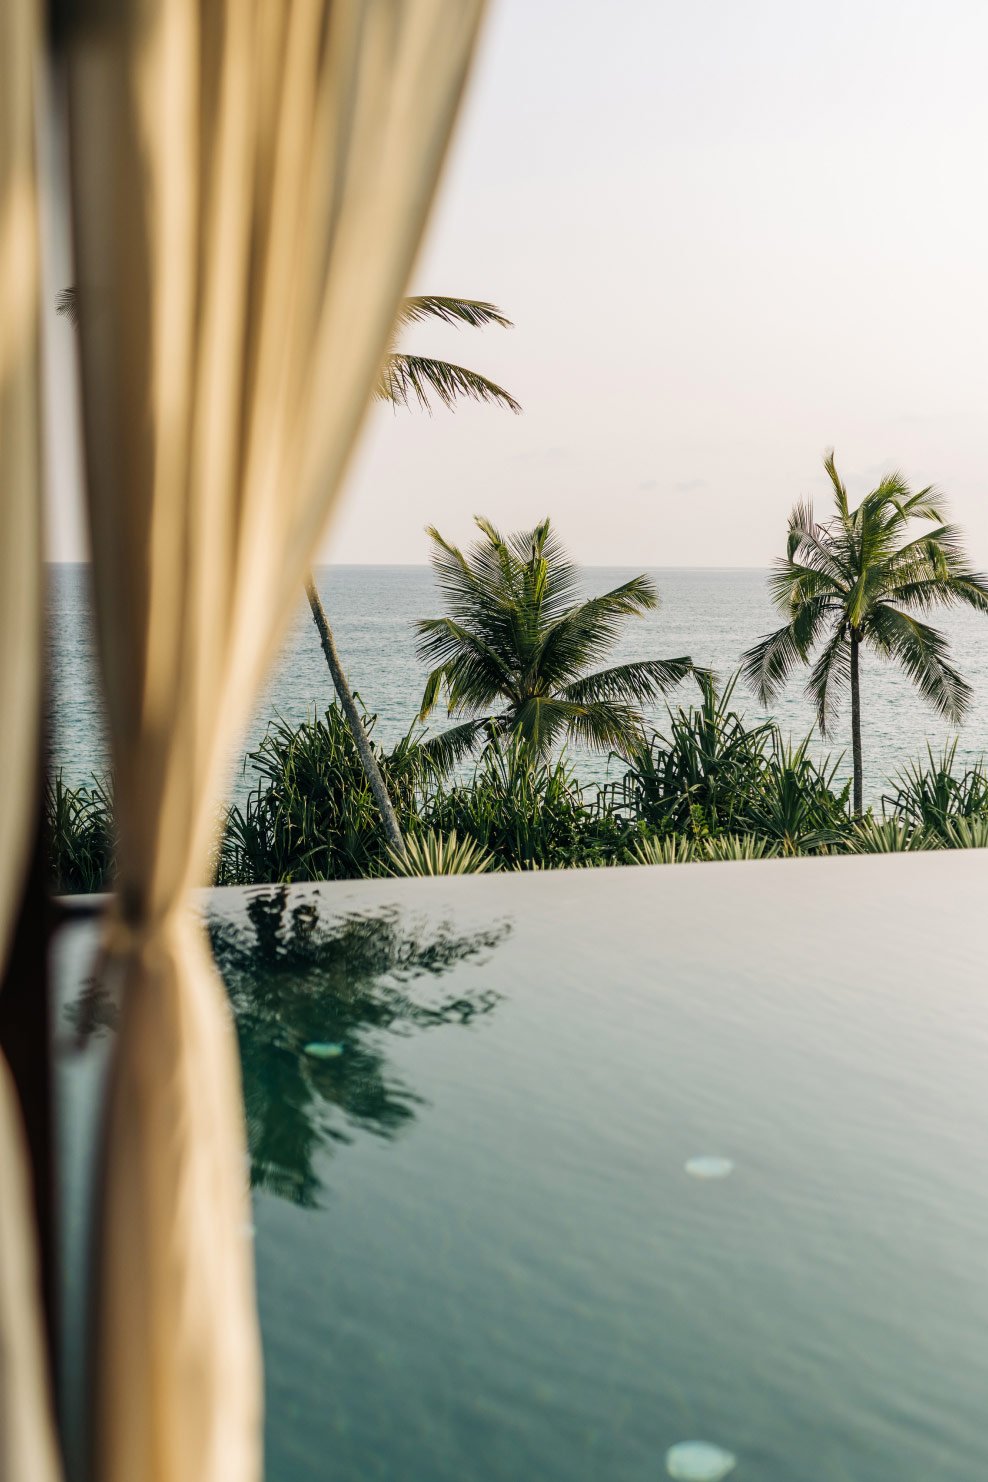 Ani-Sri-Lanka_resort_pool